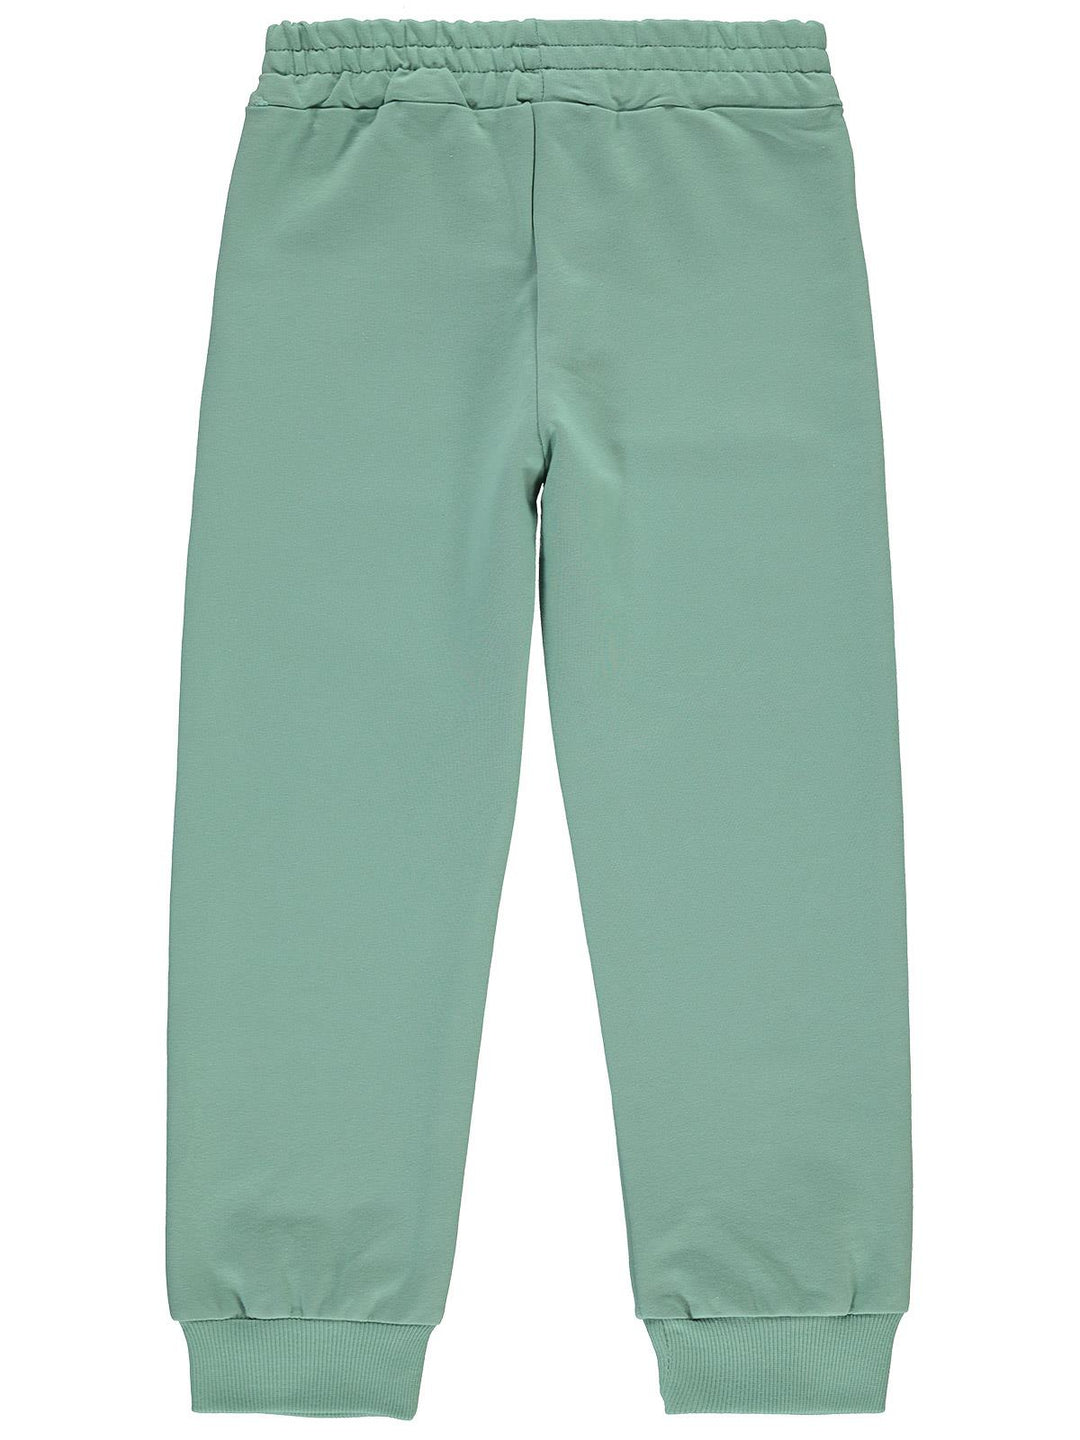 Civil Girls Cotton Trouser #8009-3 (S-22)